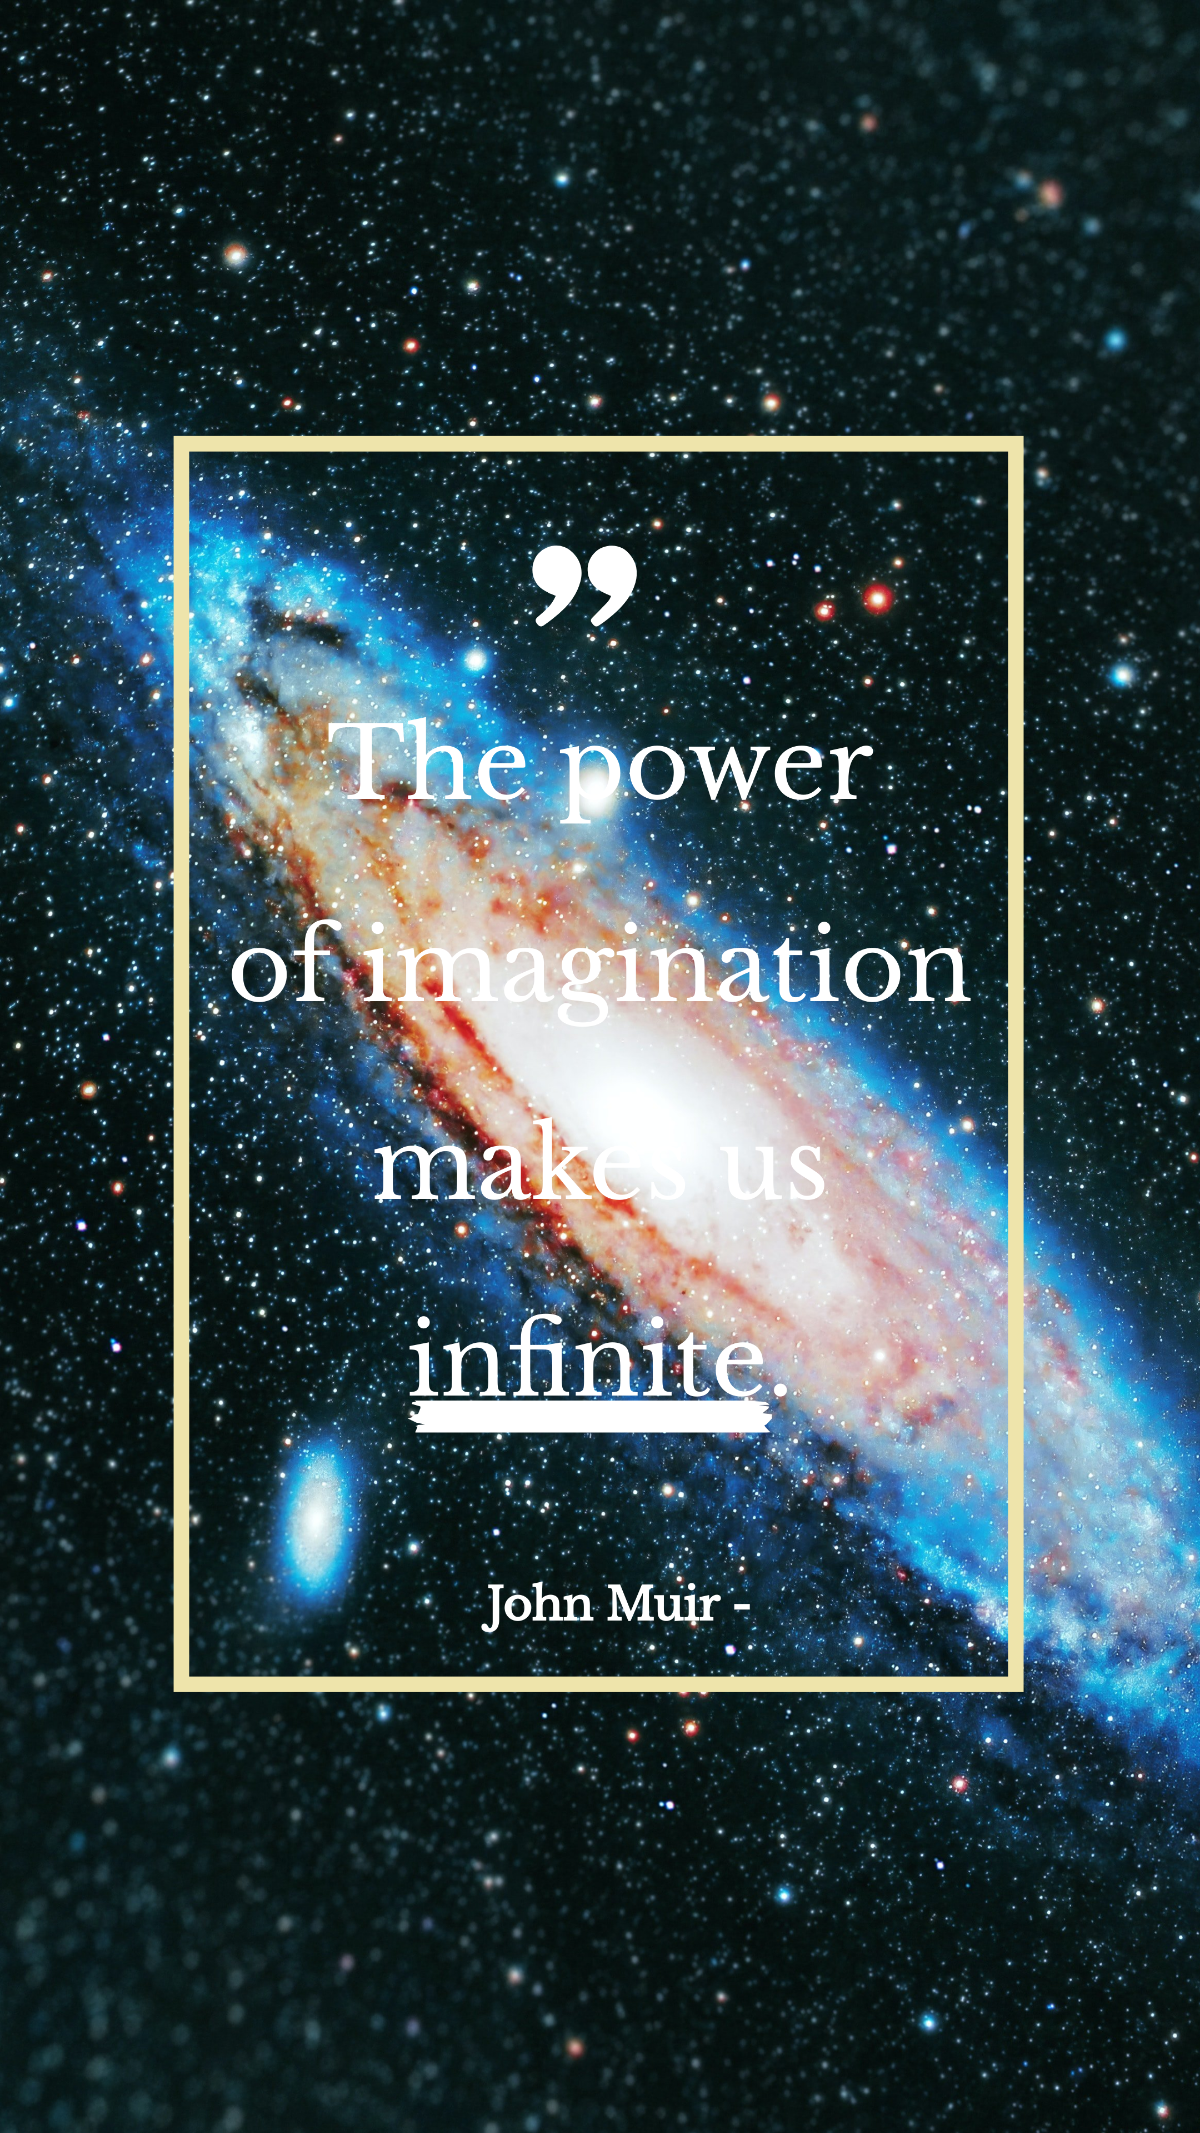 John Muir - The power of imagination makes us infinite. Template